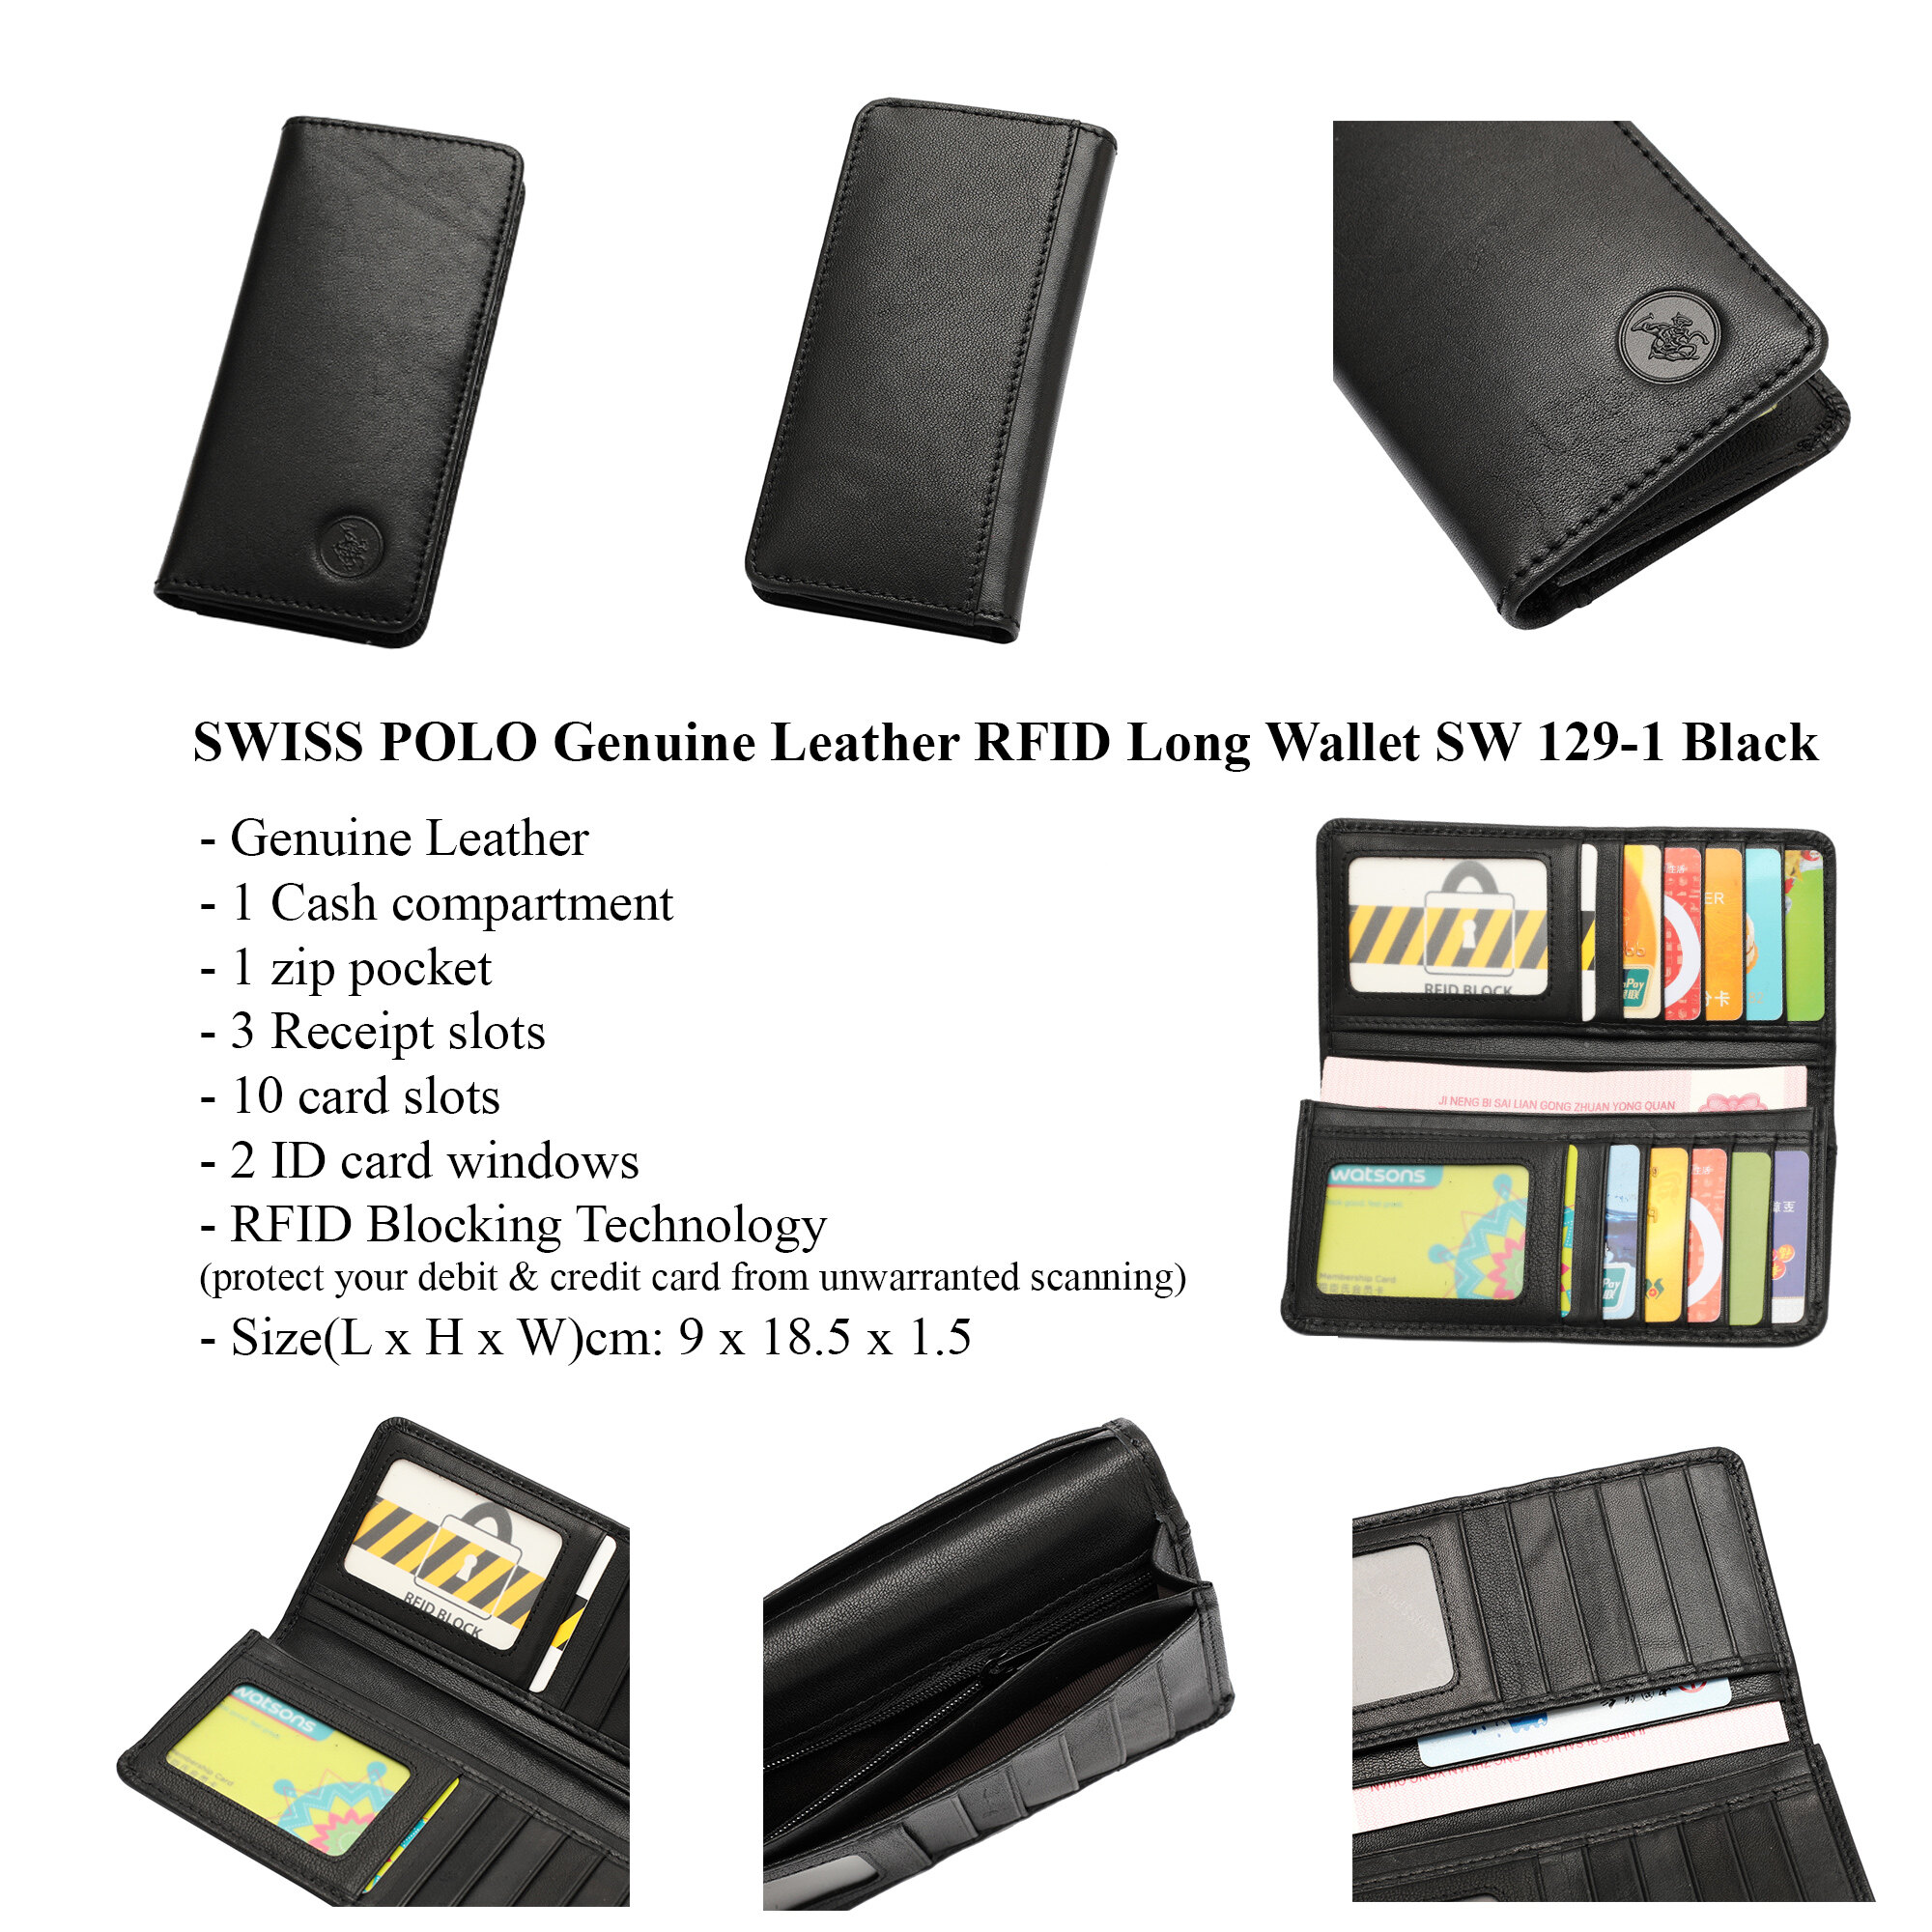 SWISS POLO Genuine Leather RFID Long Wallet SW 129-1 BLACK